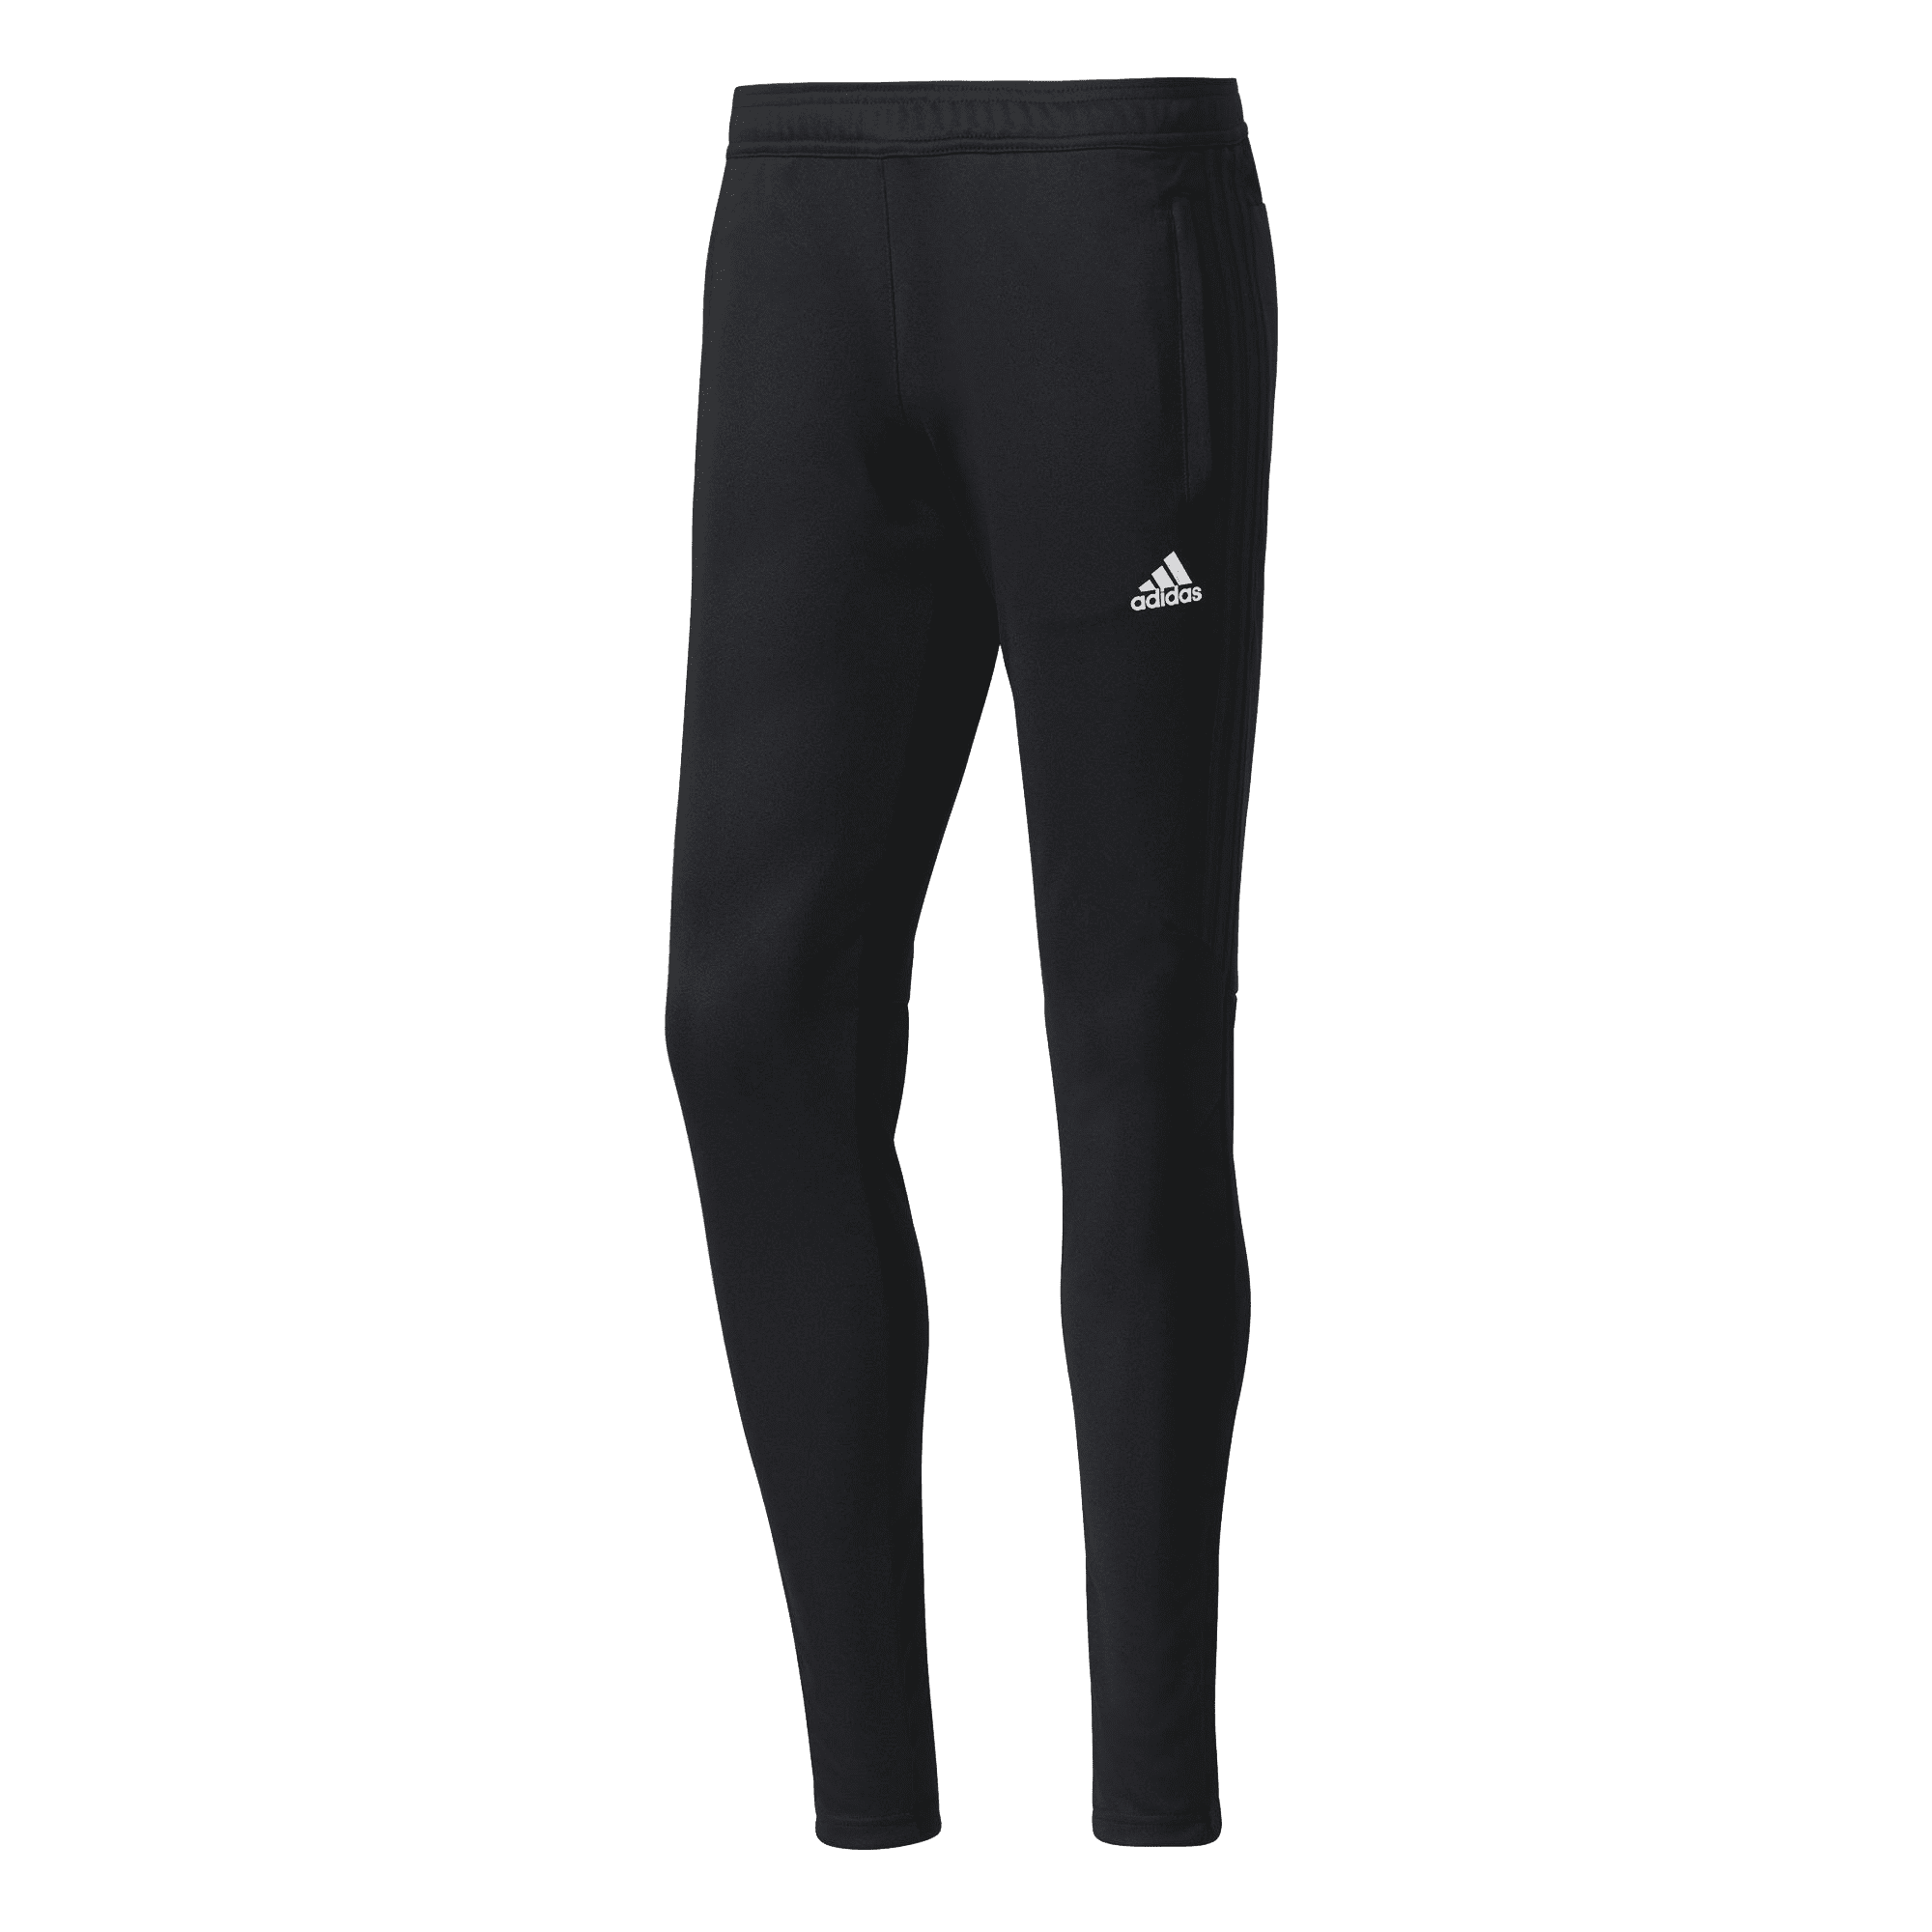 adidas Women's Soccer Tiro 17 Training Pants Black - Walmart.com